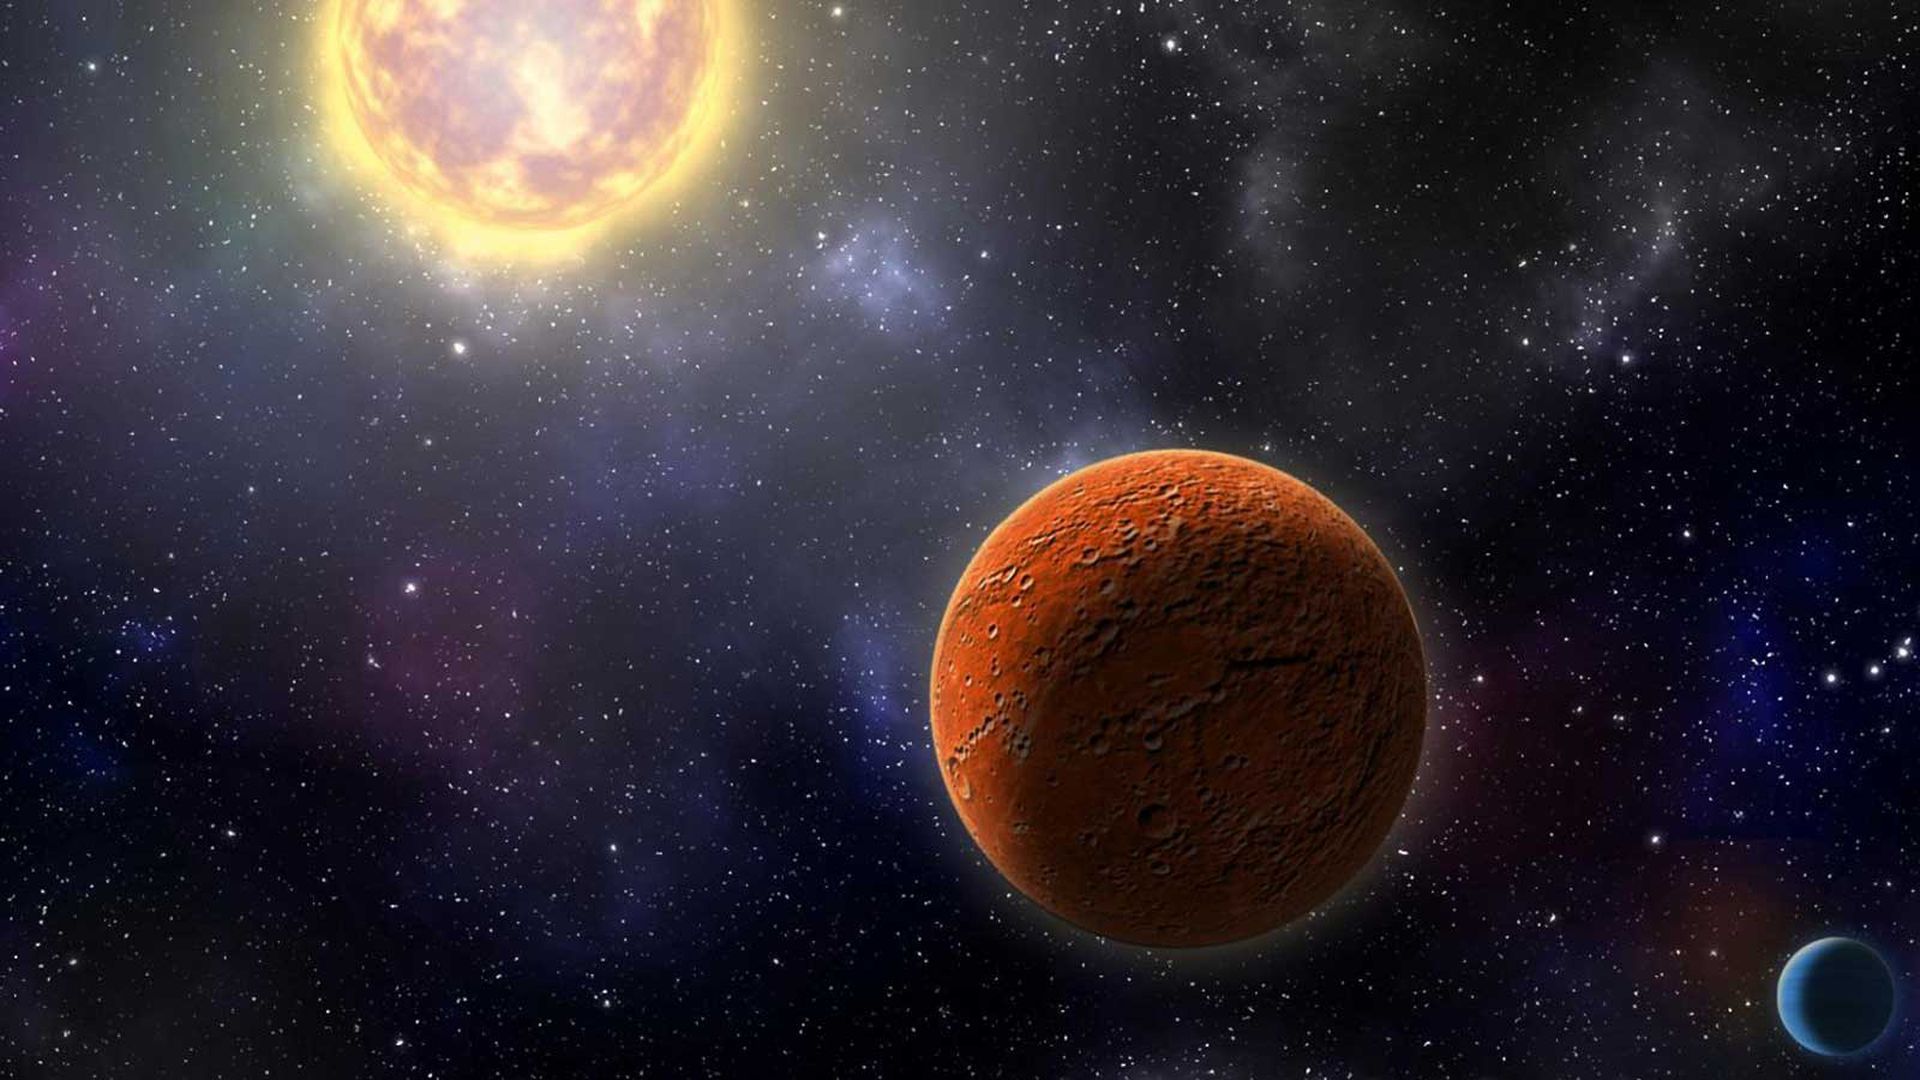 Descubren tres planetas que podrían albergar vida en un sistema solar cercano